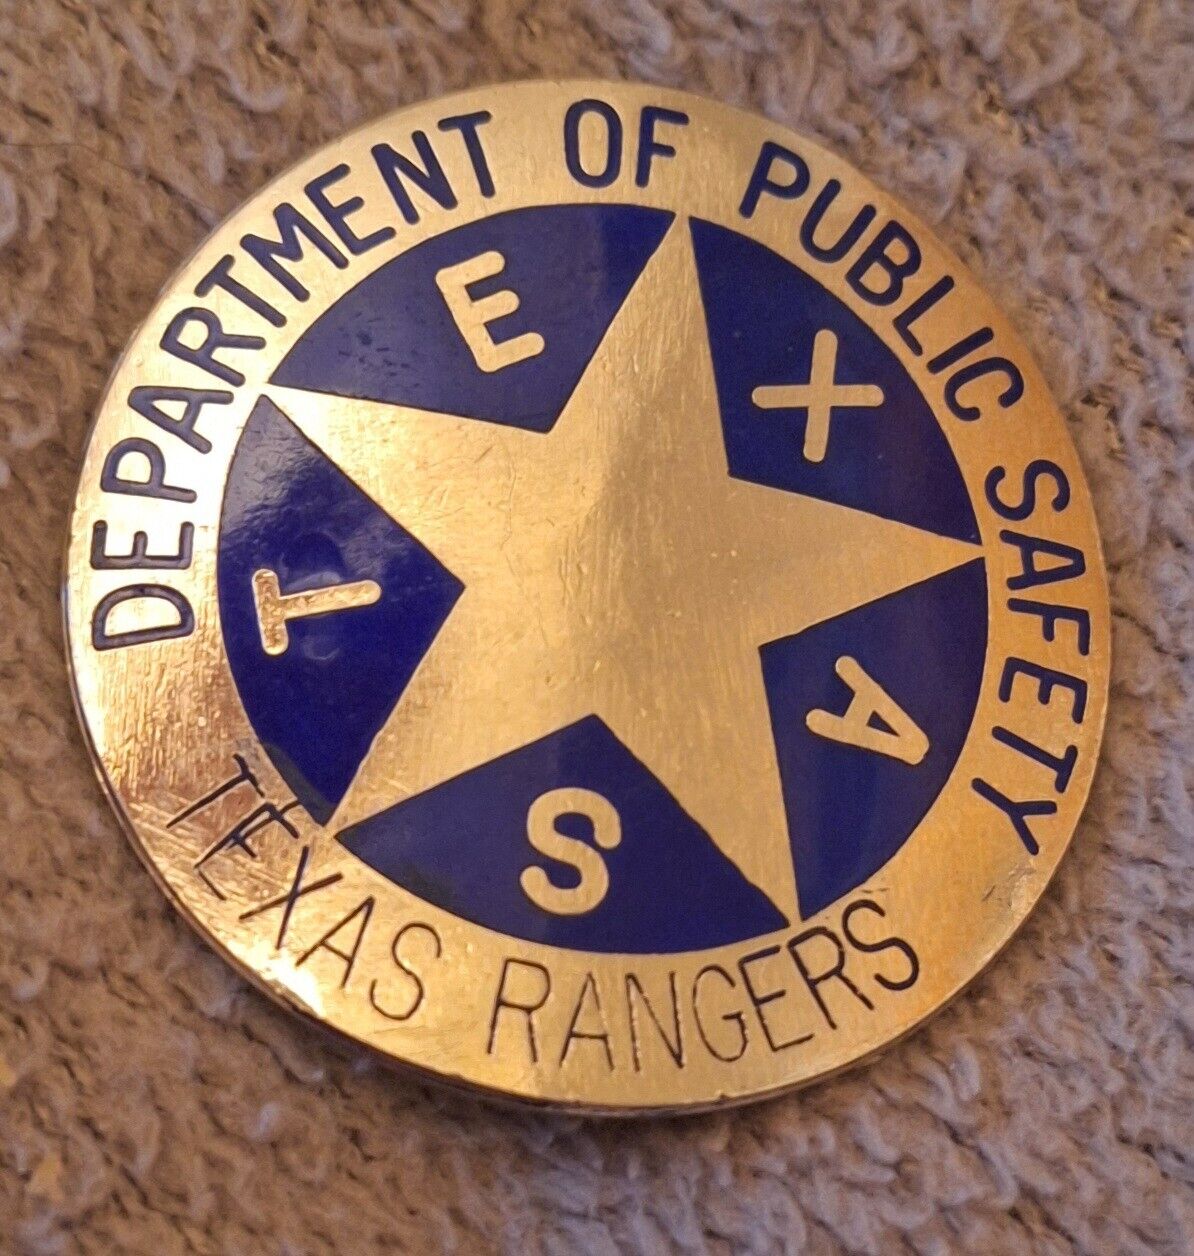 Vintage TEXAS RANGER badge